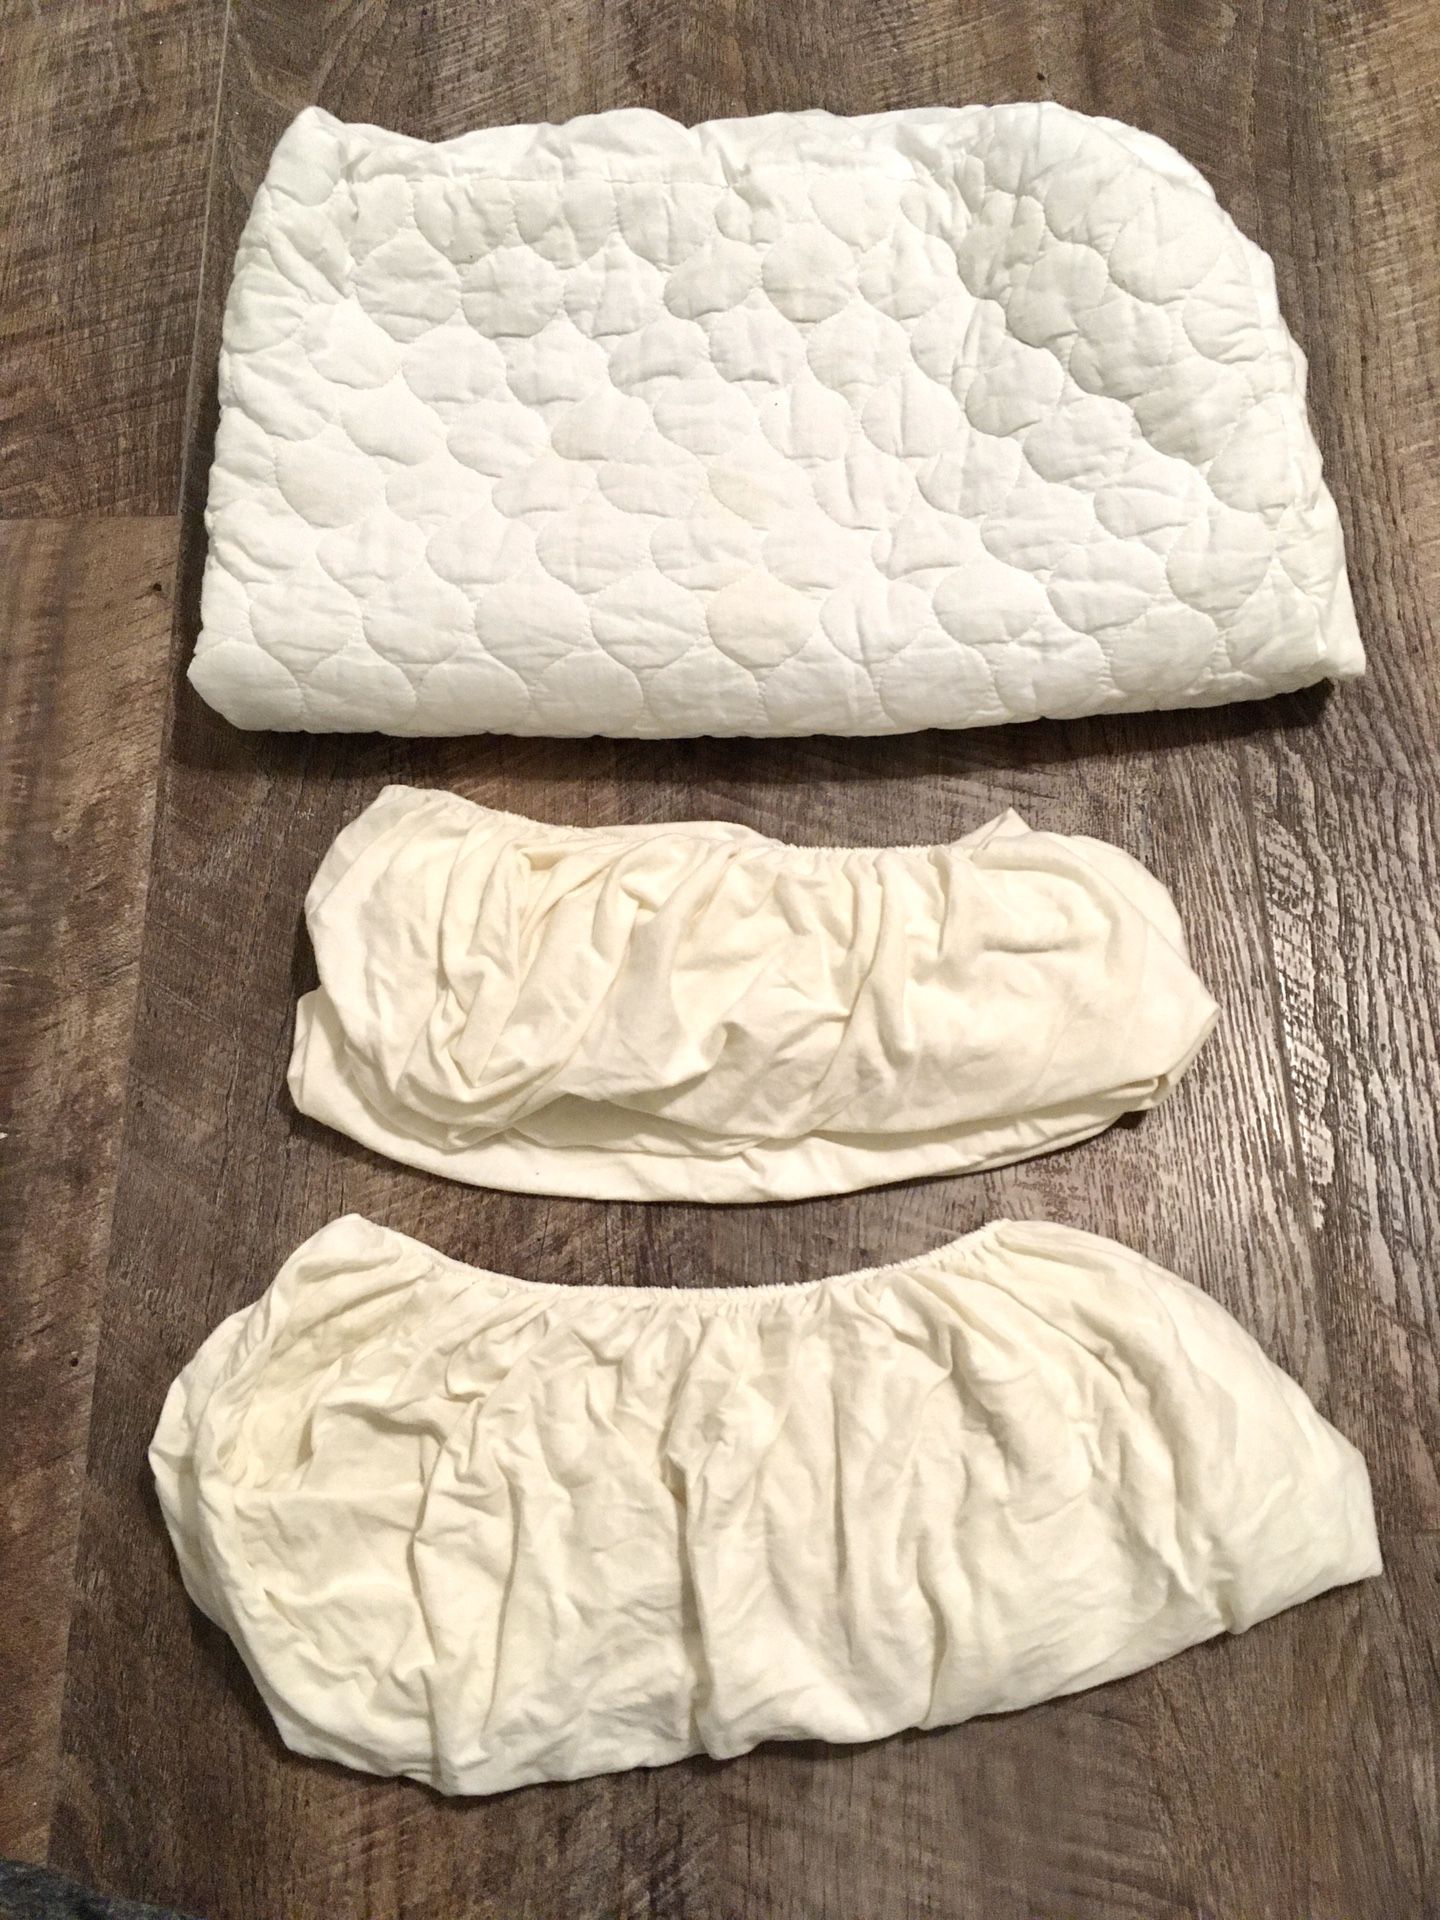 Mini-crib Mattress cover and 2 bassinet sheets